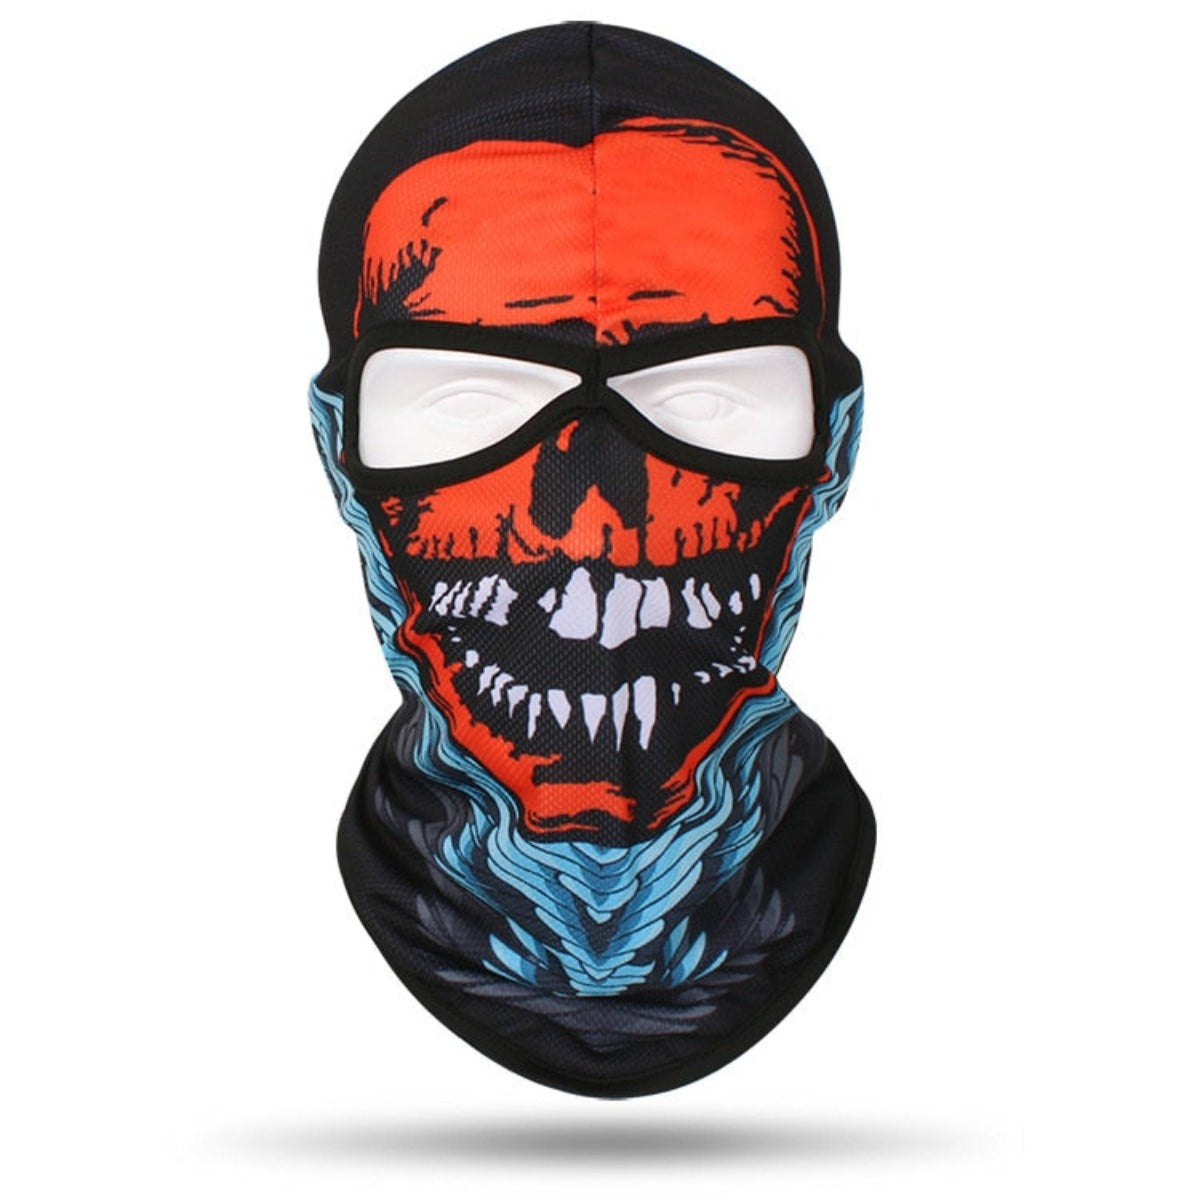 Skull Balaclava Full Face Mask